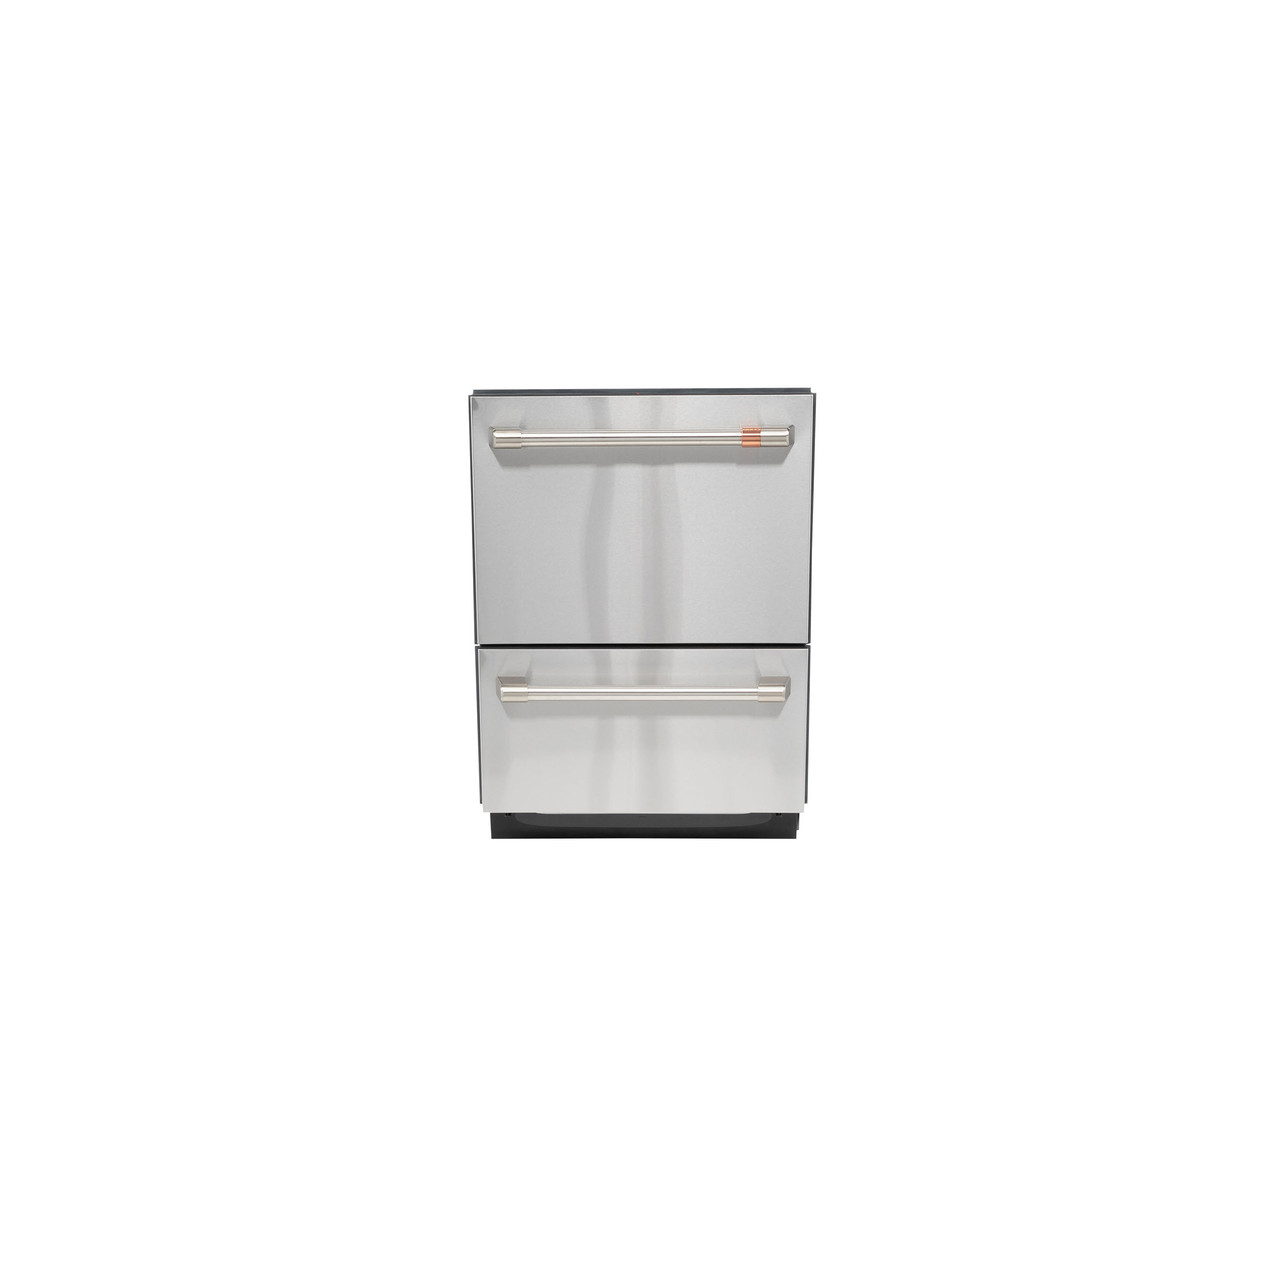 Café™ Dishwasher Double Drawer - CDD420P3TD1 - Cafe Appliances